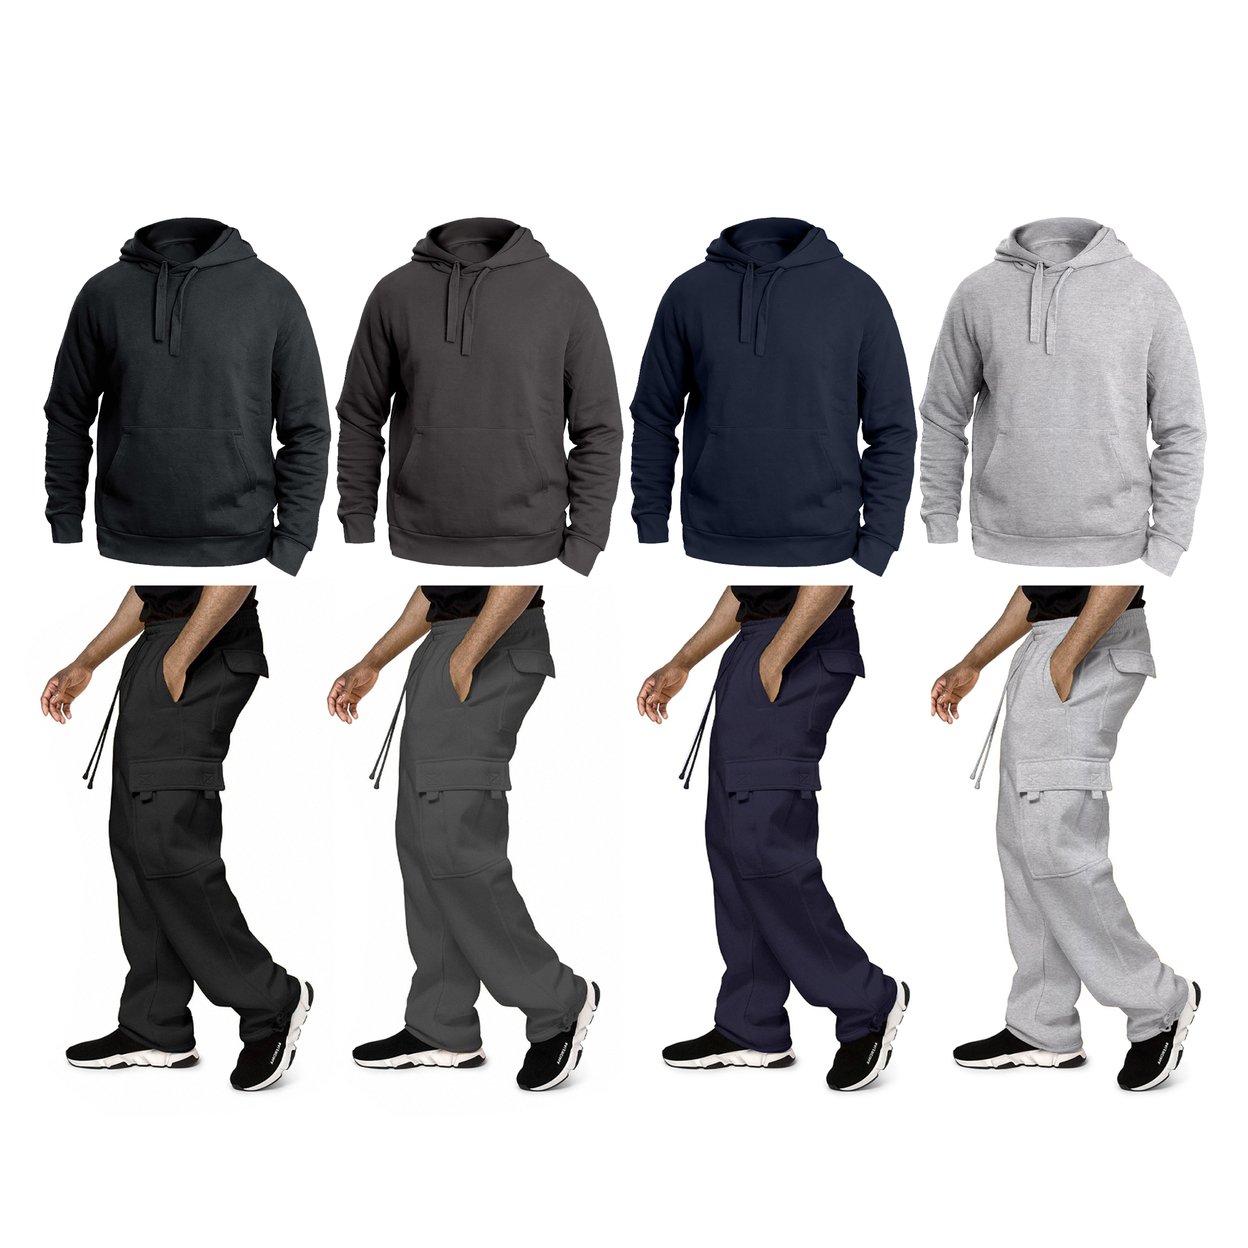 Multi-Pack: Big & Tall Men's Winter Warm Cozy Athletic Fleece Lined Multi-Pocket Cargo Sweatsuit - Black, 2-pack, Xx-large